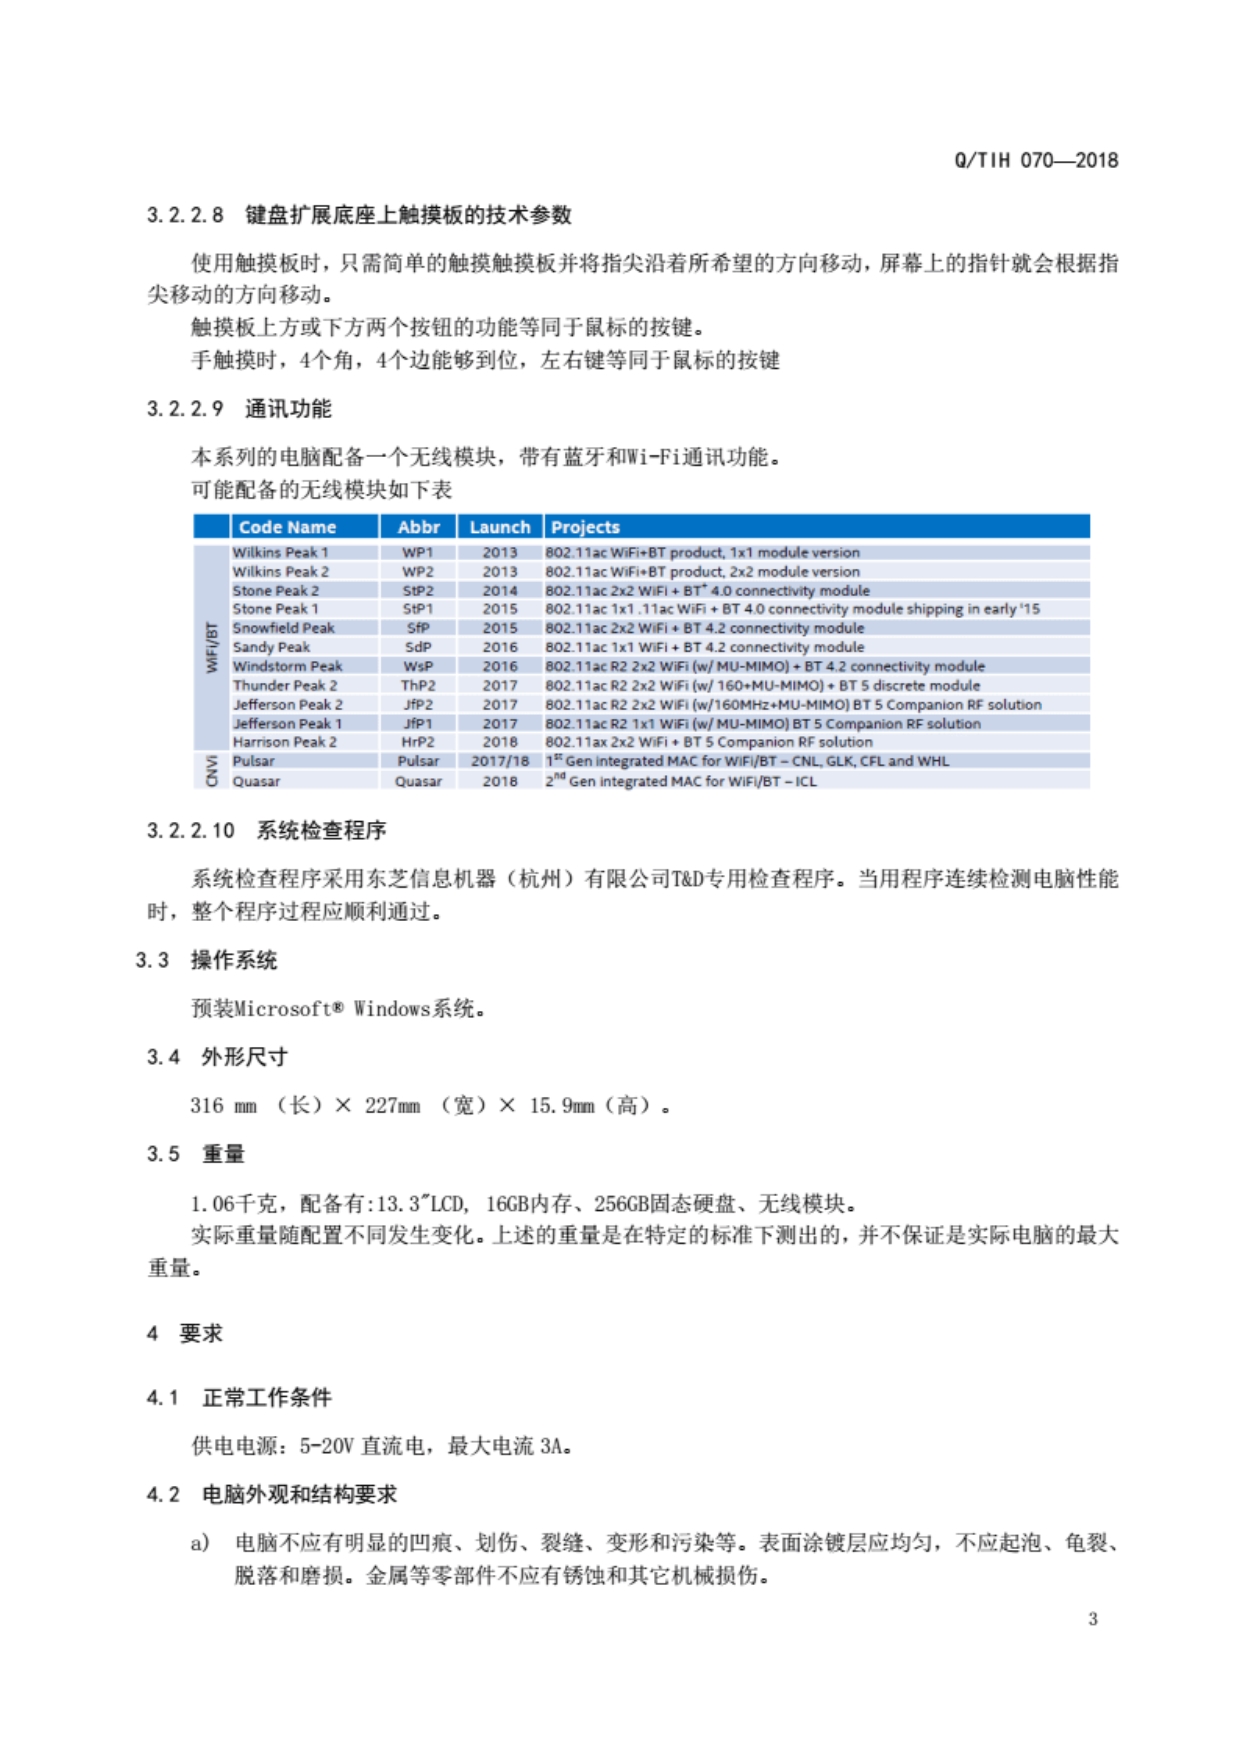 Q_TIH070-2018东芝PORTEGEX30-E系列笔记本电脑._第5页